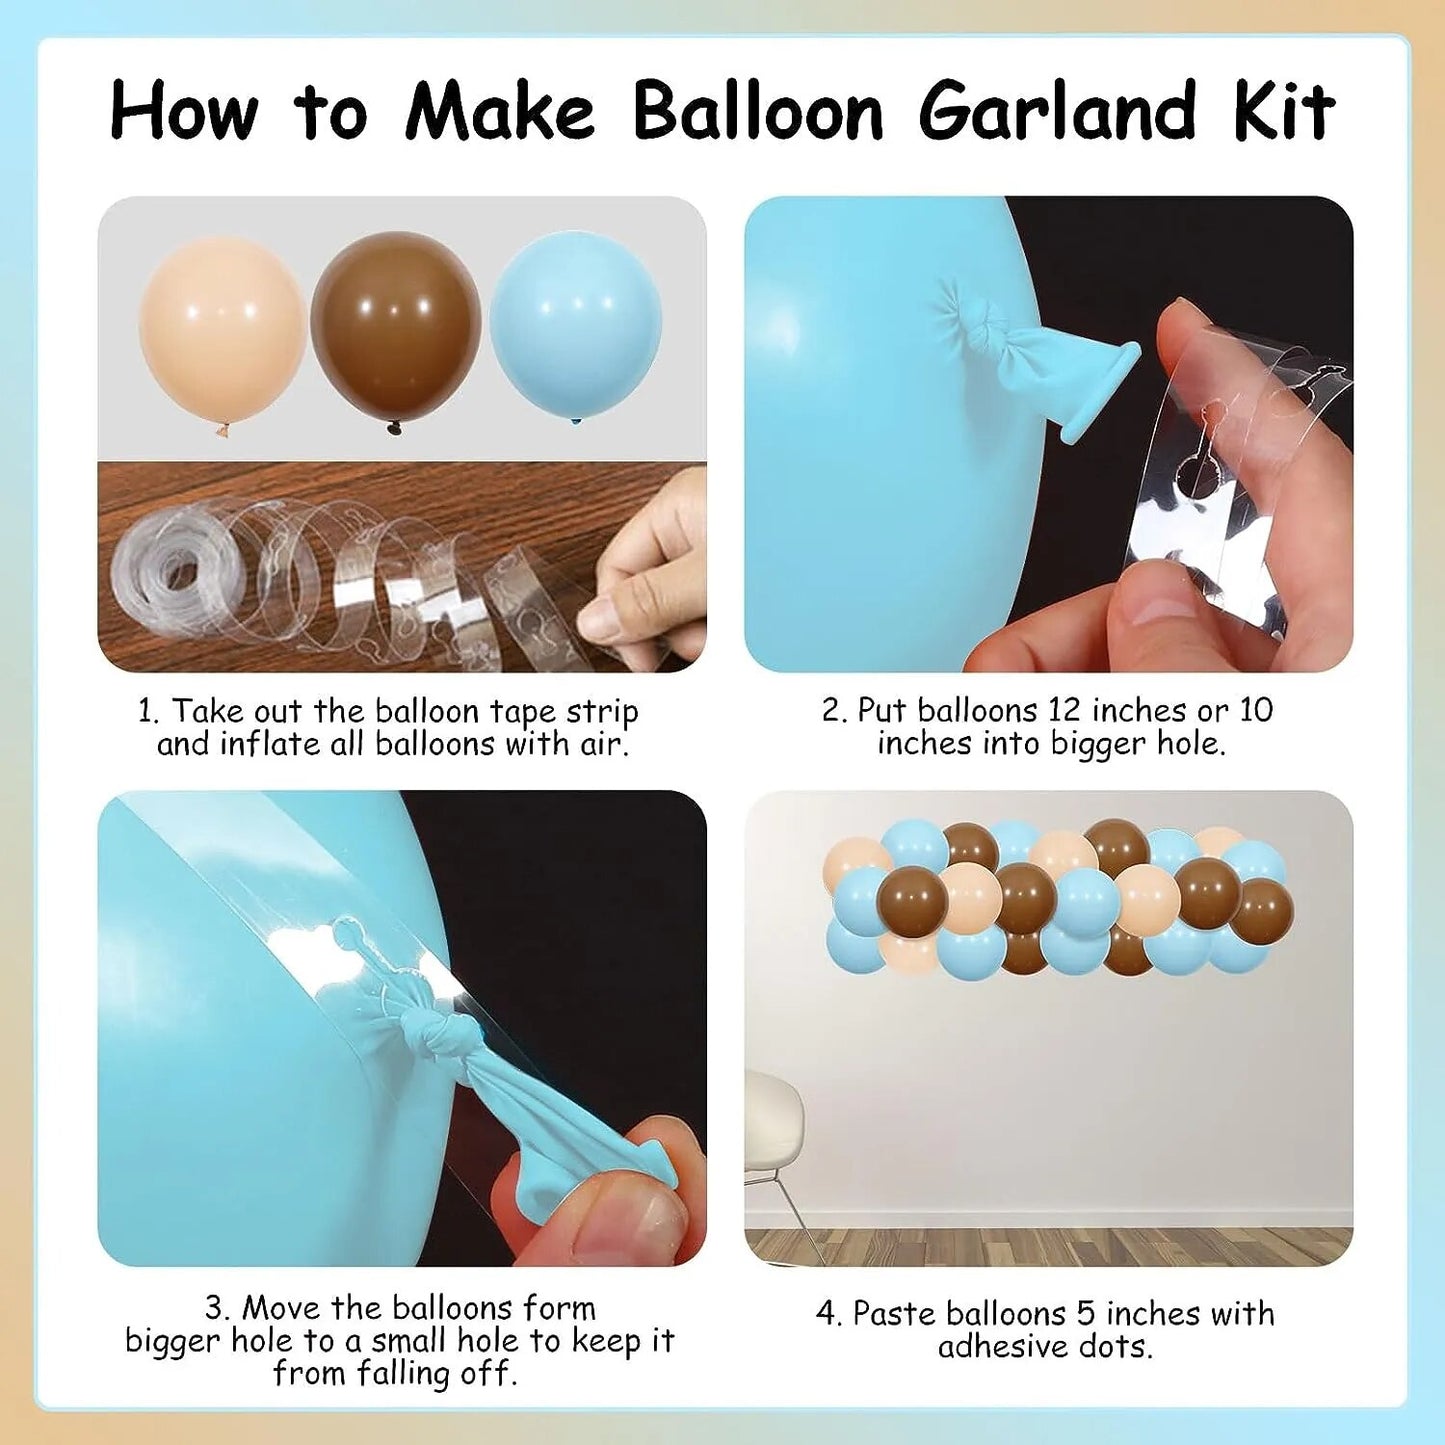 Baby Shower Kit: Balloon Arch, Mummy To Be Sash, Pom Poms, Banner, Cake Topper & Tassels.